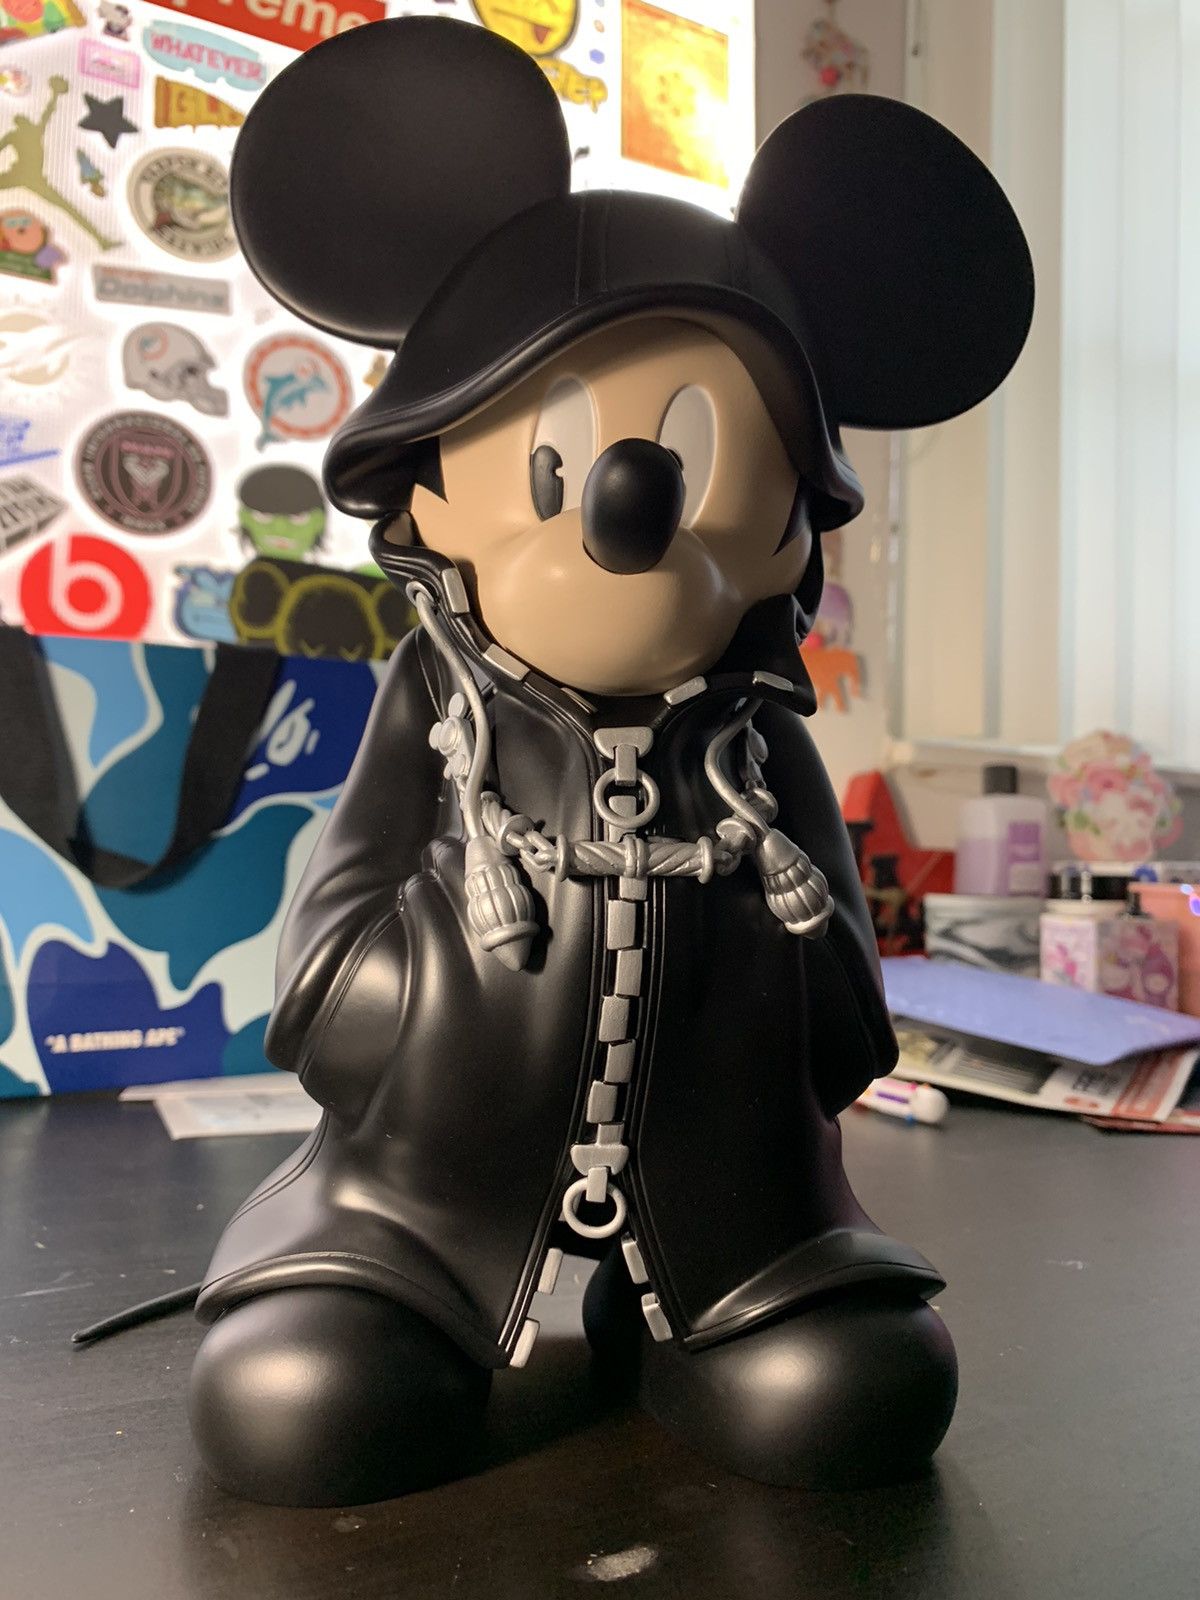 Disney King Mickey kingdom hearts large statue 11” figure vinyl